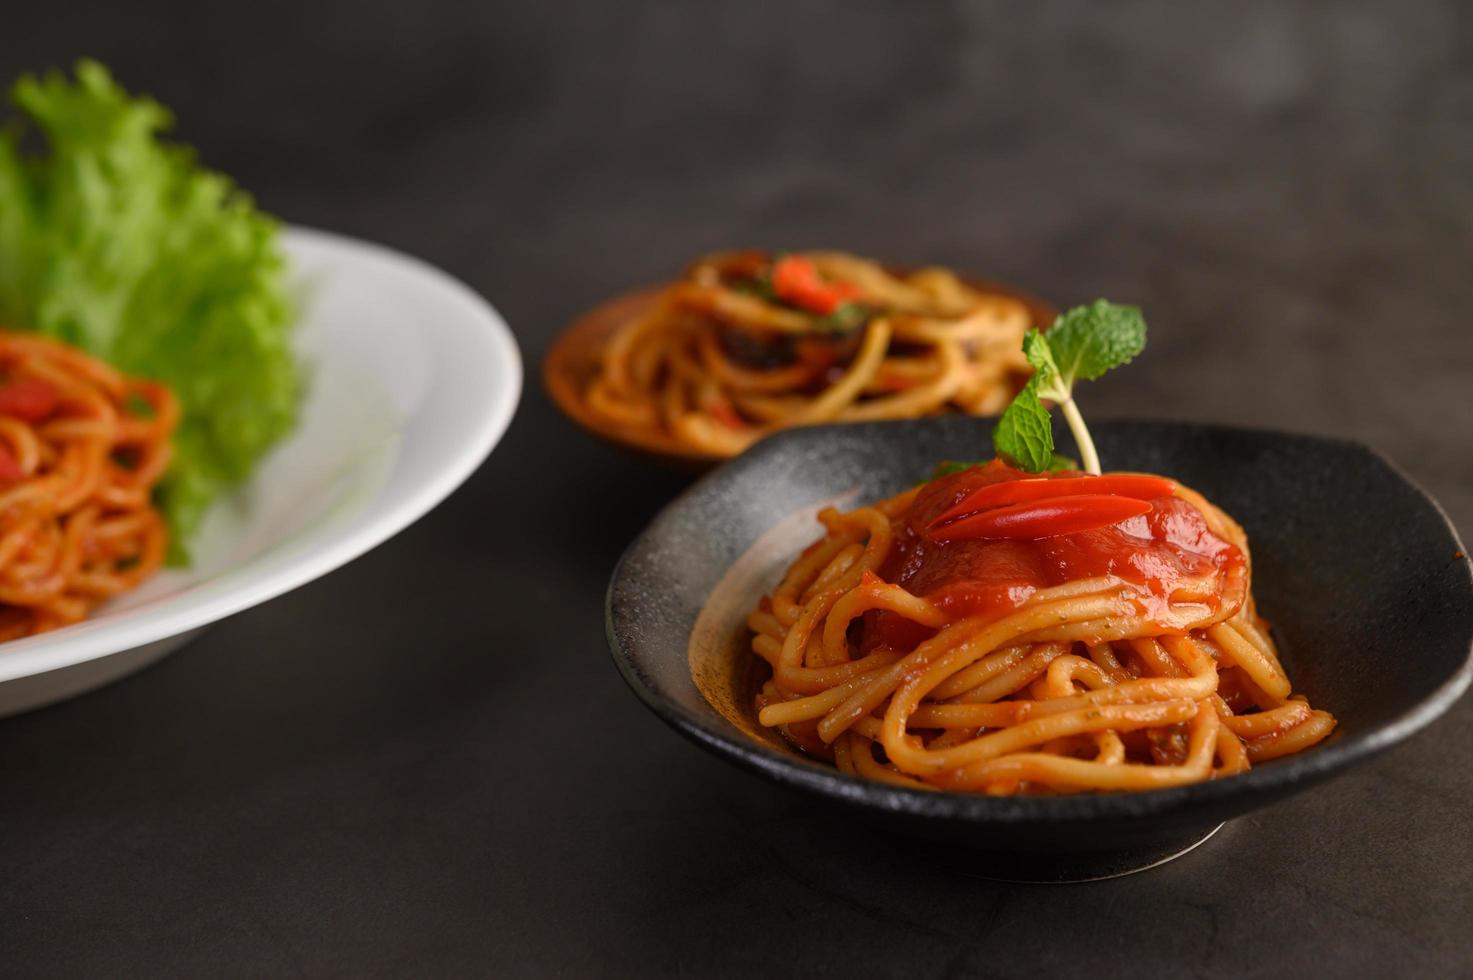 pâtes spaghetti italiennes à la sauce tomate photo